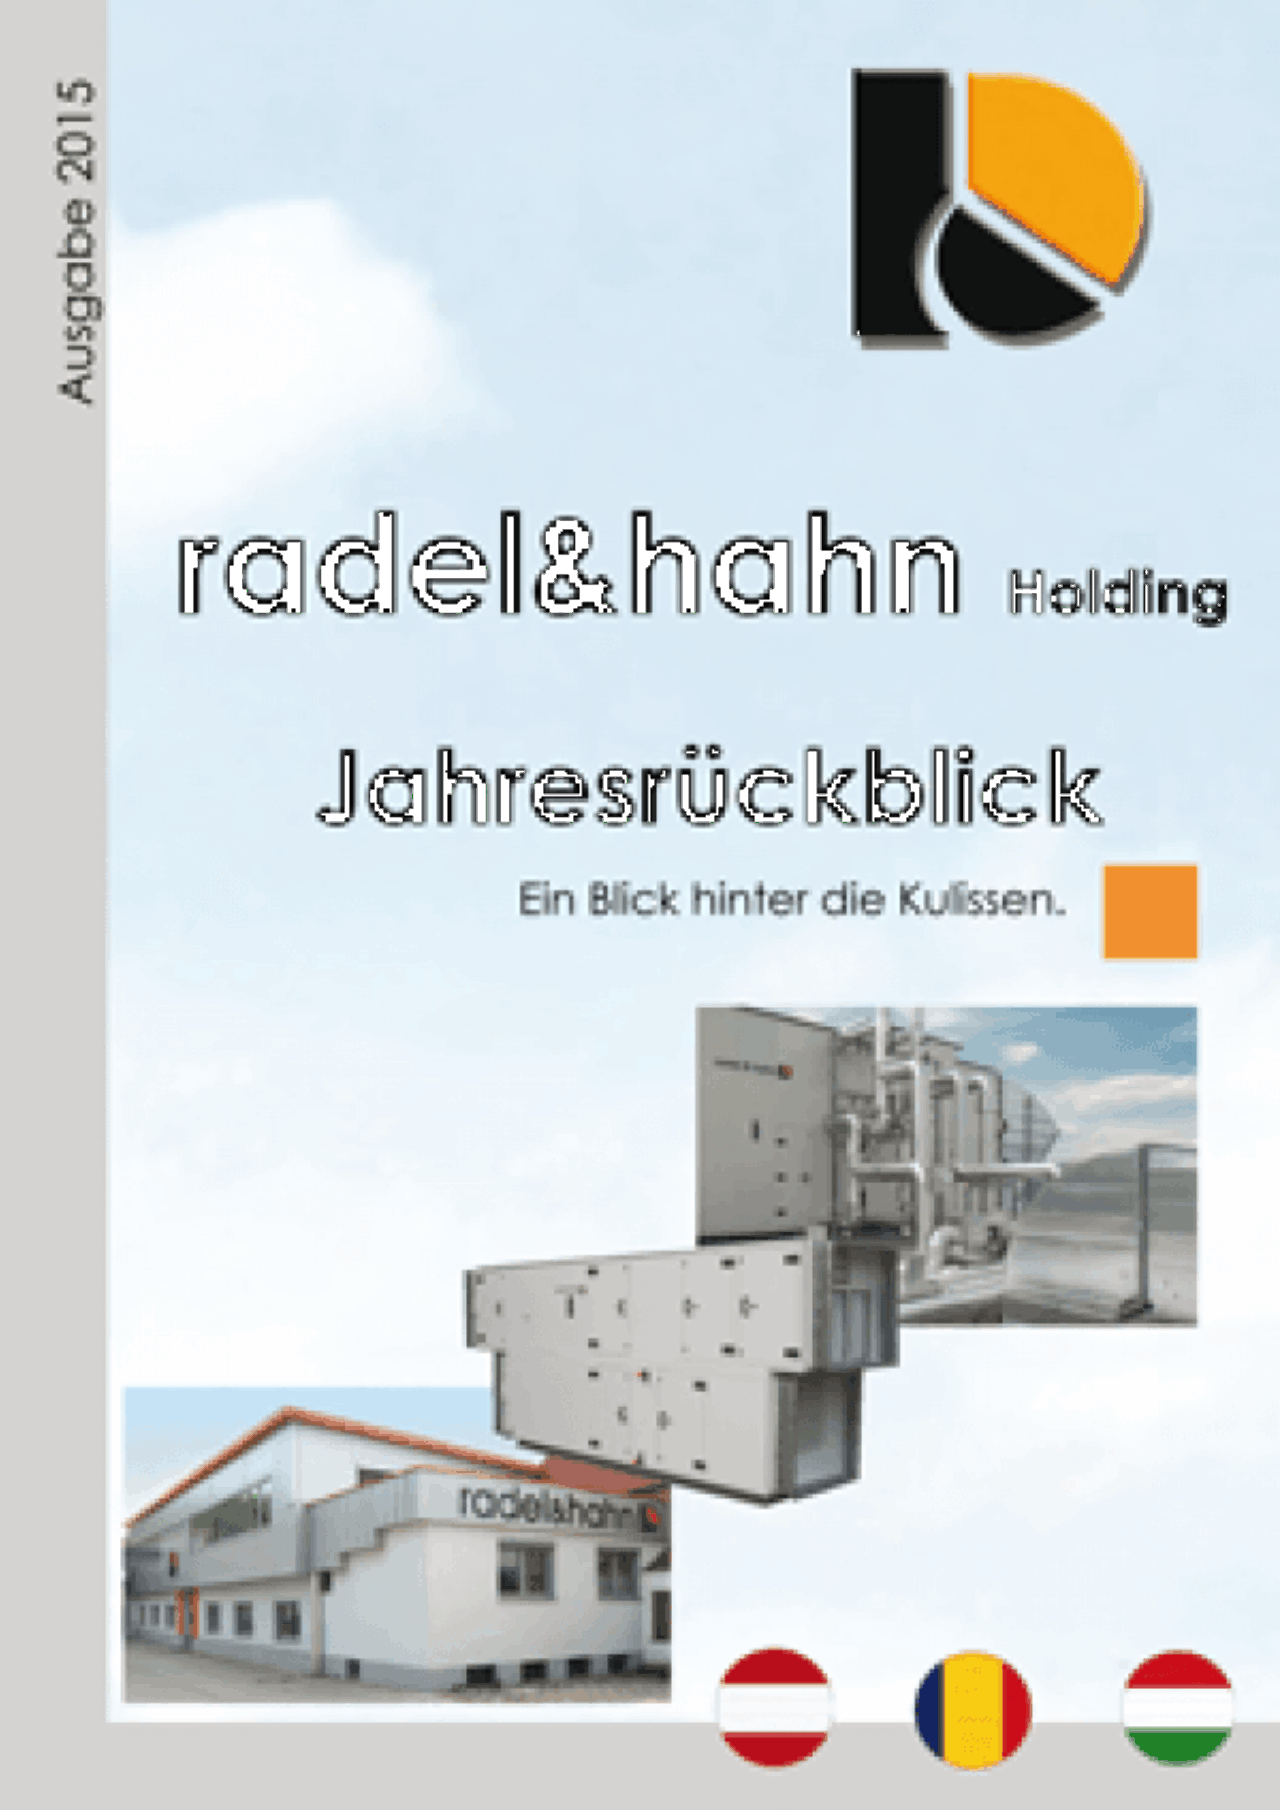 radel&hahn Holding Jahresruckblick 2015 | Blog - Microwell